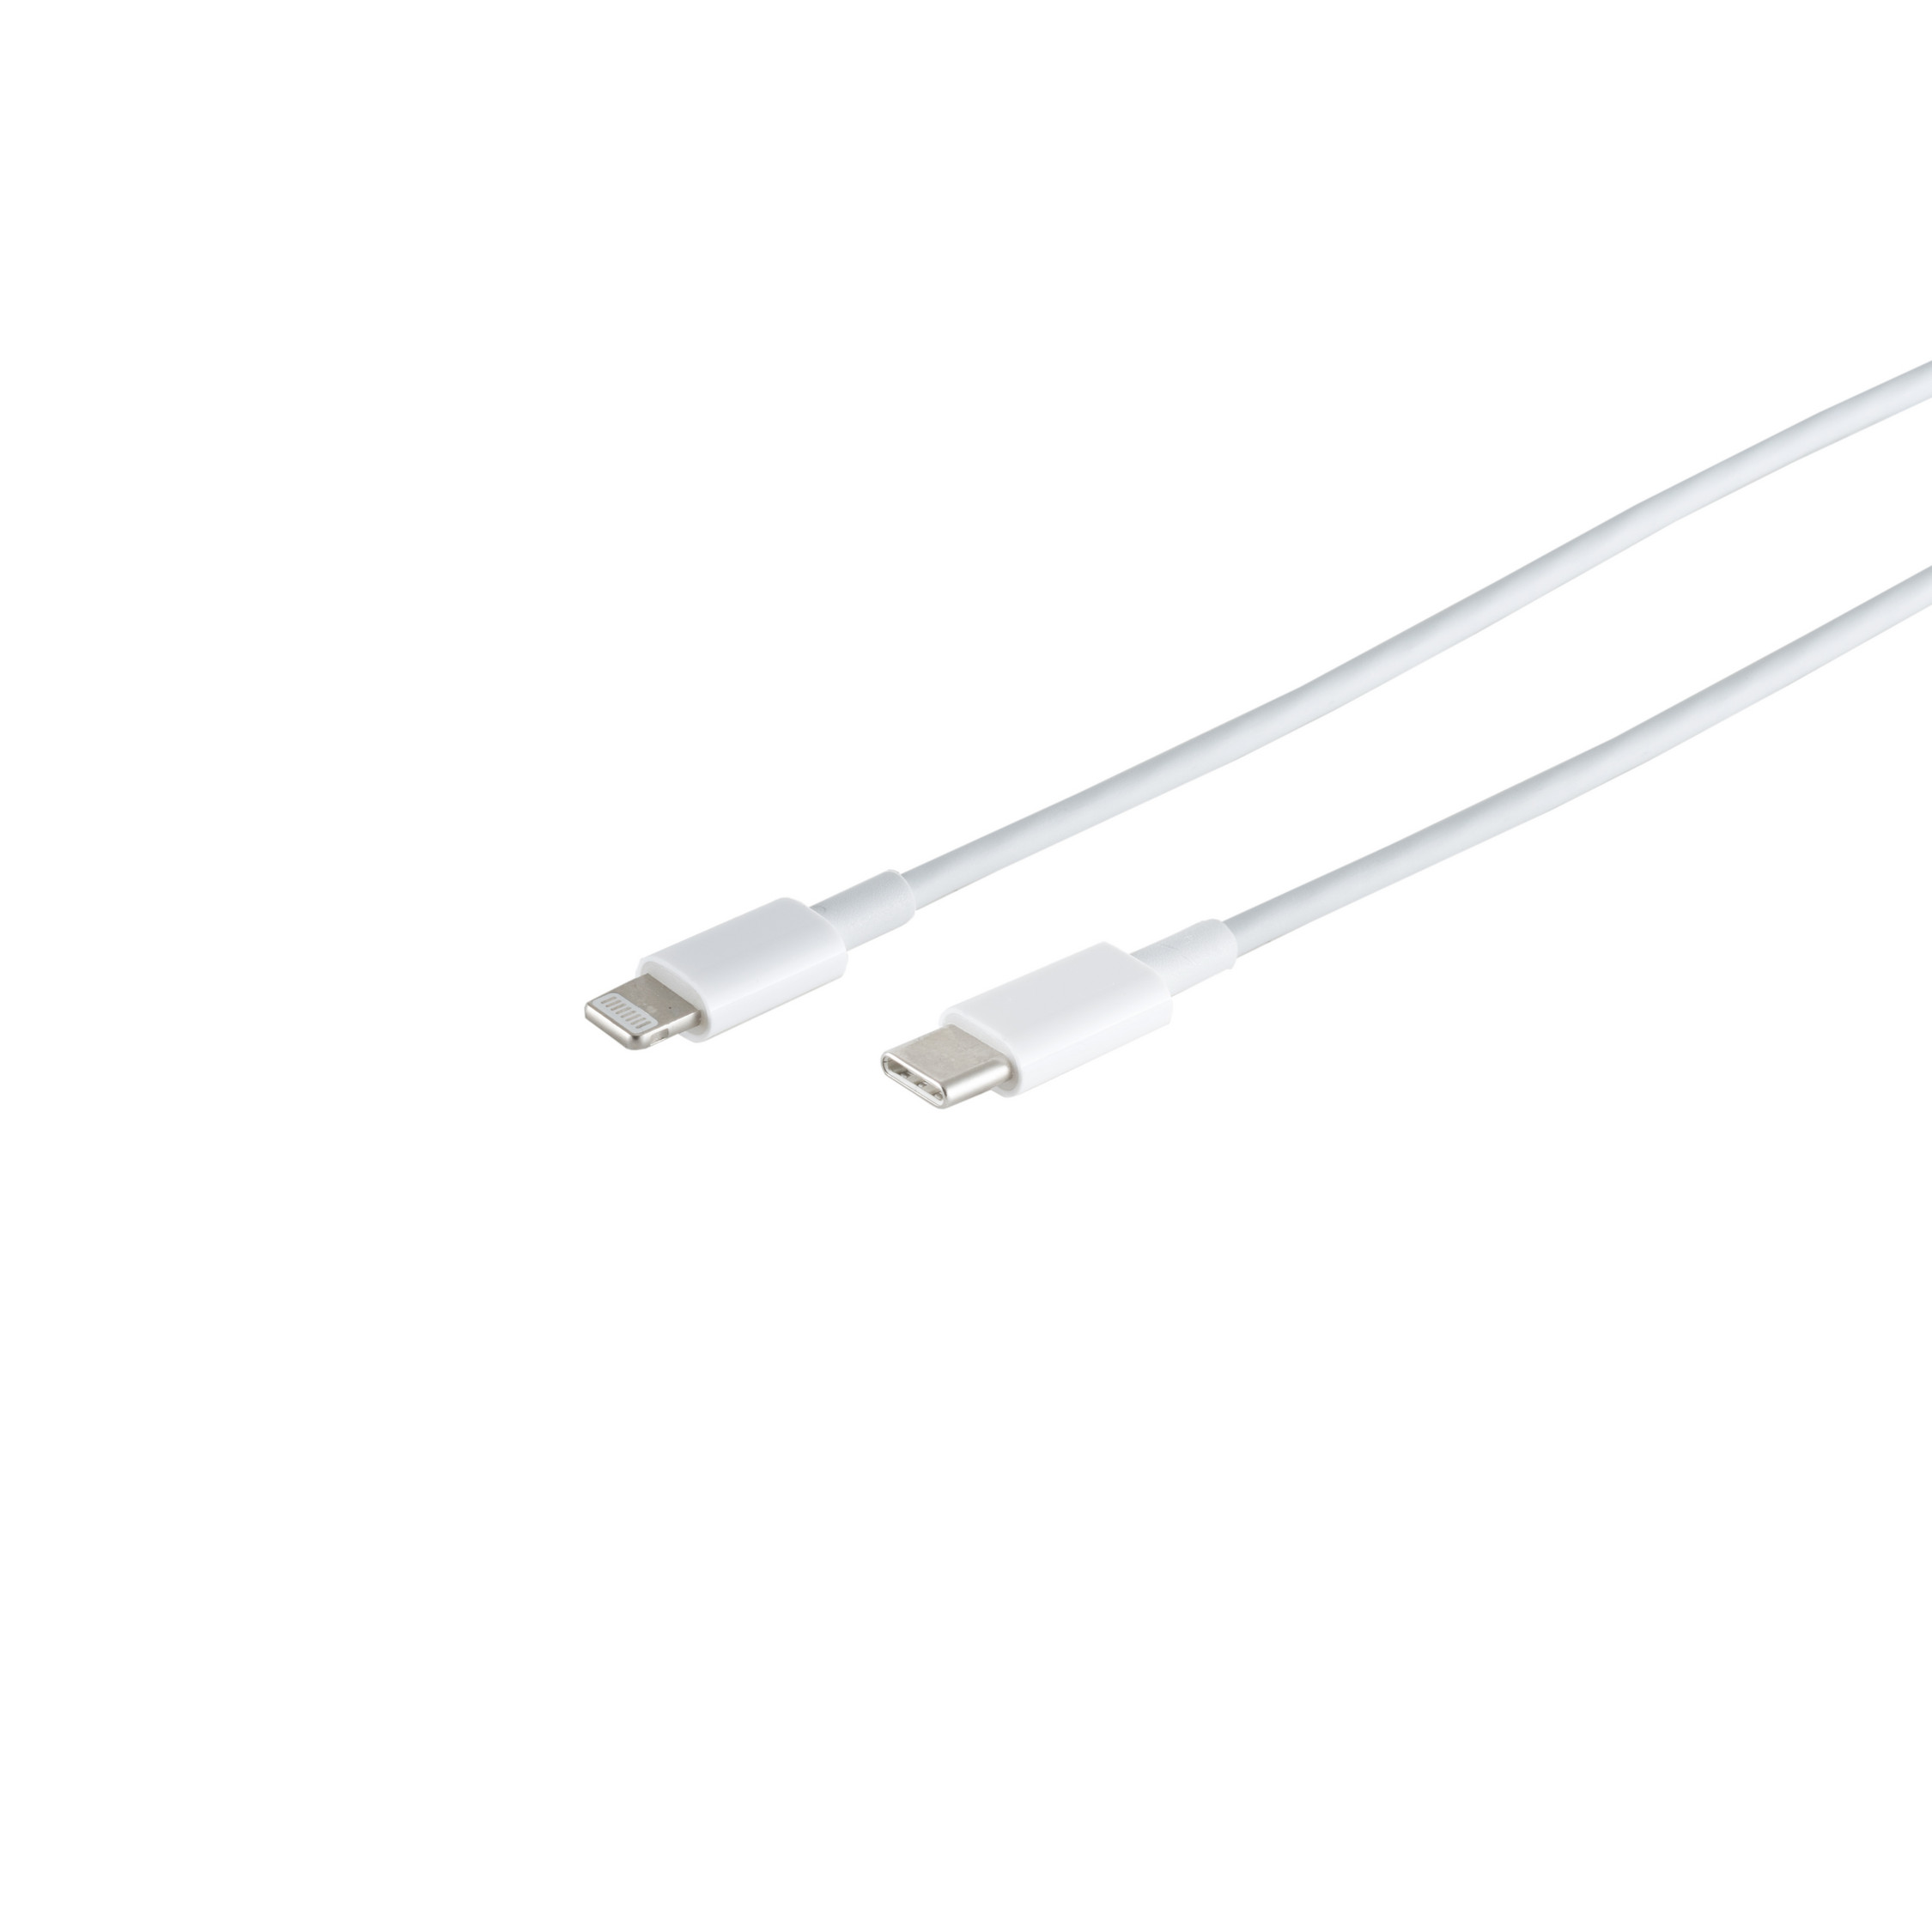 S/CONN MAXIMUM CONNECTIVITY Kabel, Lade USB-C® auf Kabel Stecker USB 8-pin USB Stecker